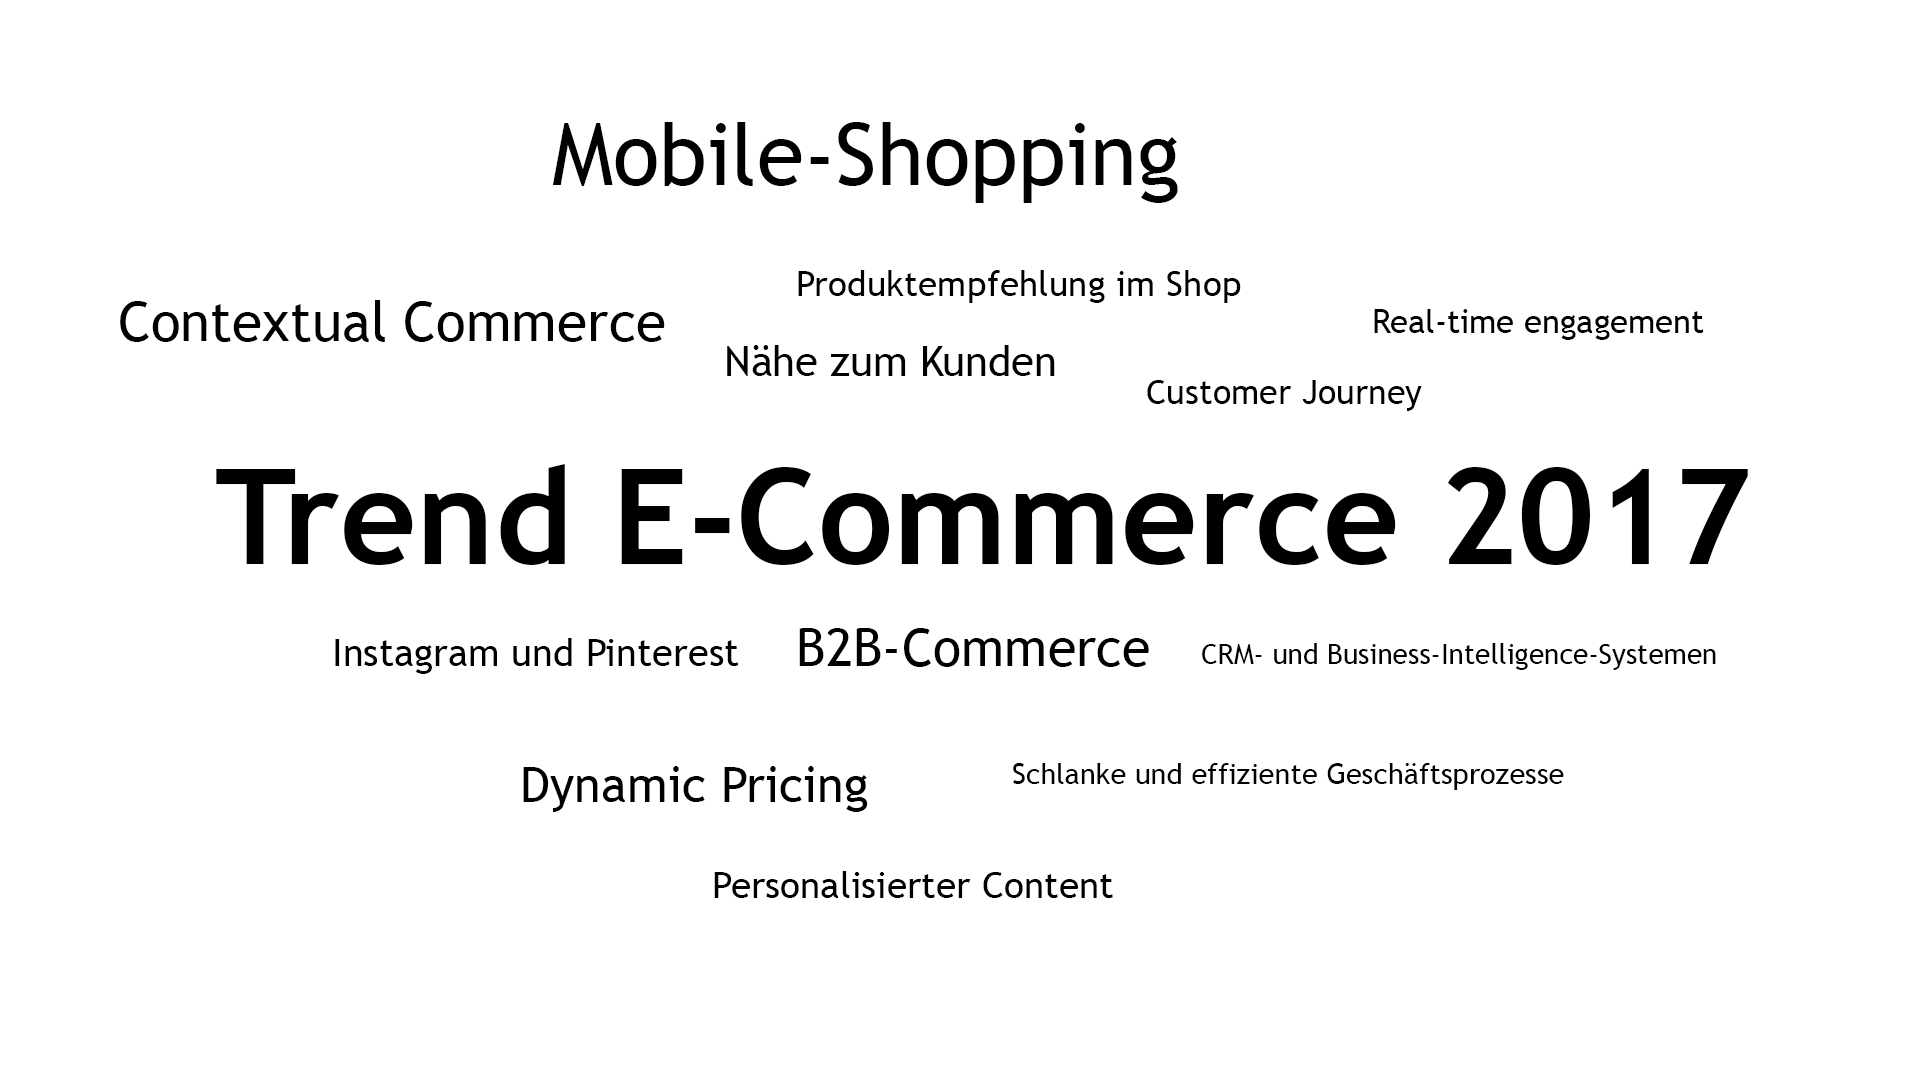 Trend E-Commerce 2017